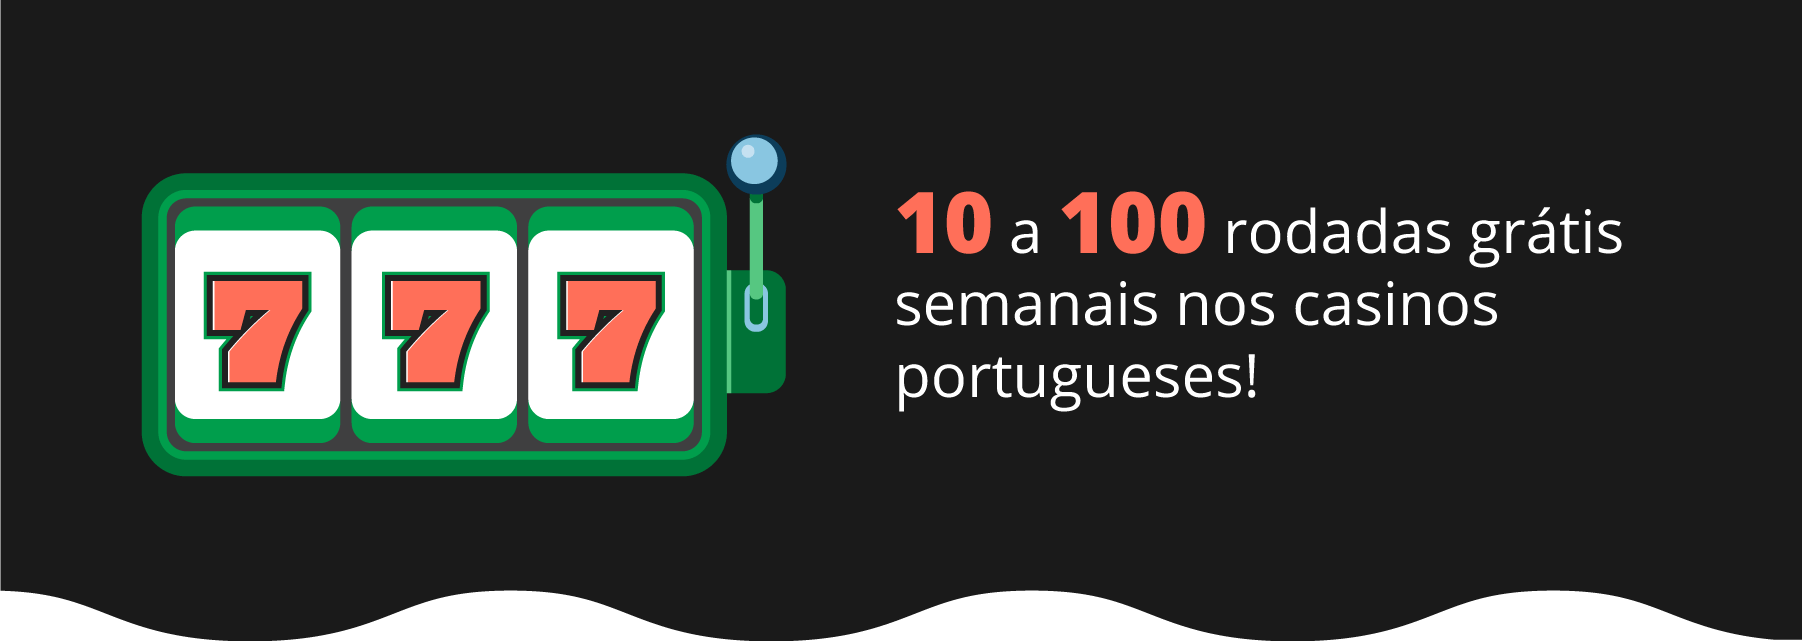 Semanal-rodadas-grátis-para-Portugal